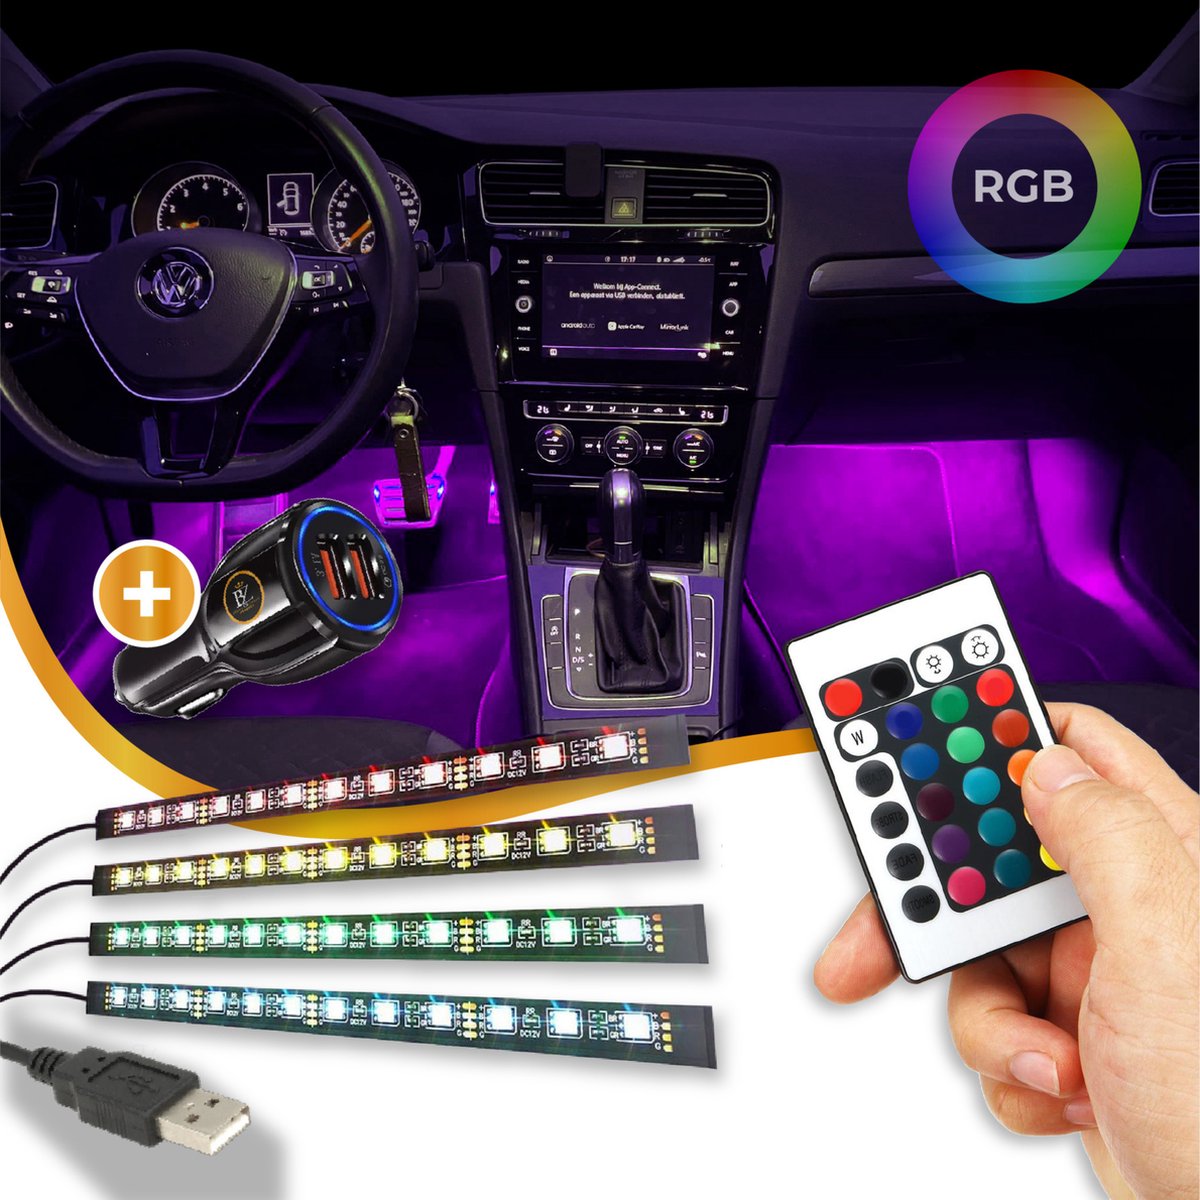 LED Auto Interieur, 5m LED Sfeerverlichting Auto USB Aansluiting, DC 12V  LED Auto